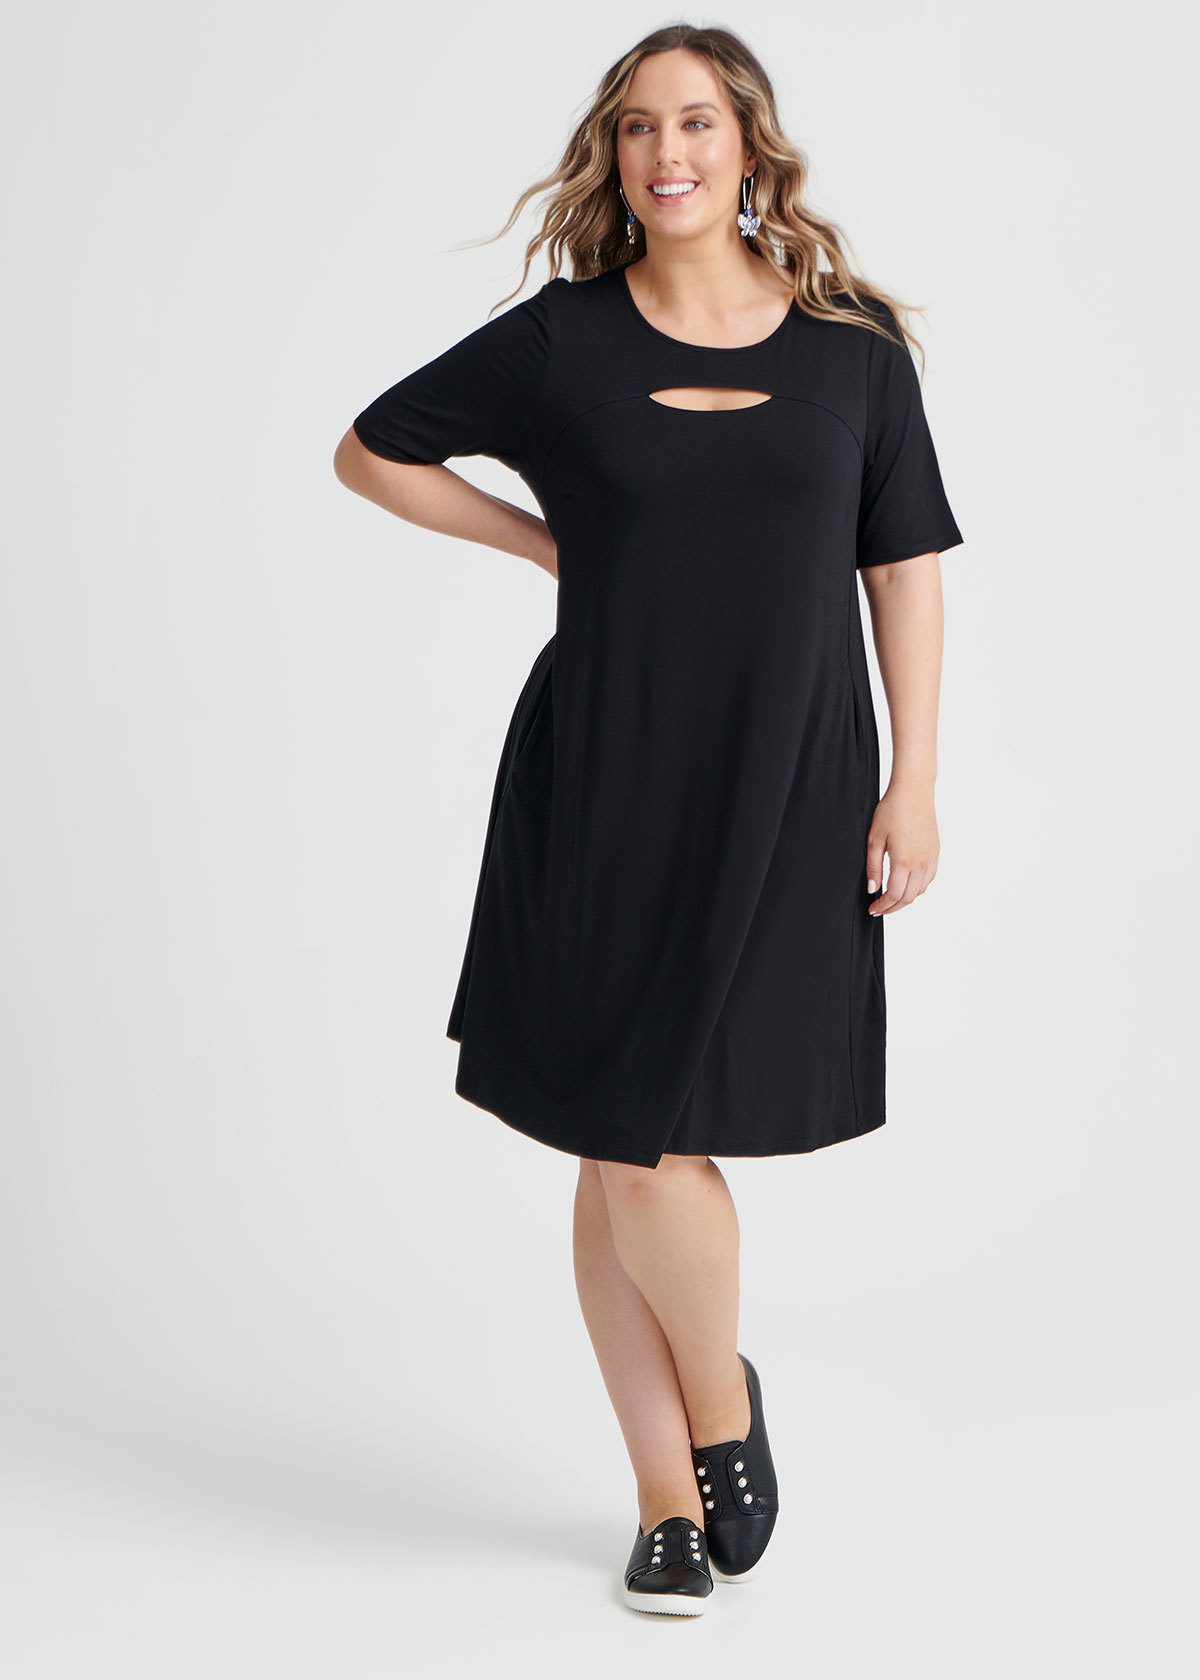 Shop Plus Size Moda Bamboo Dress in Black | Taking Shape AU